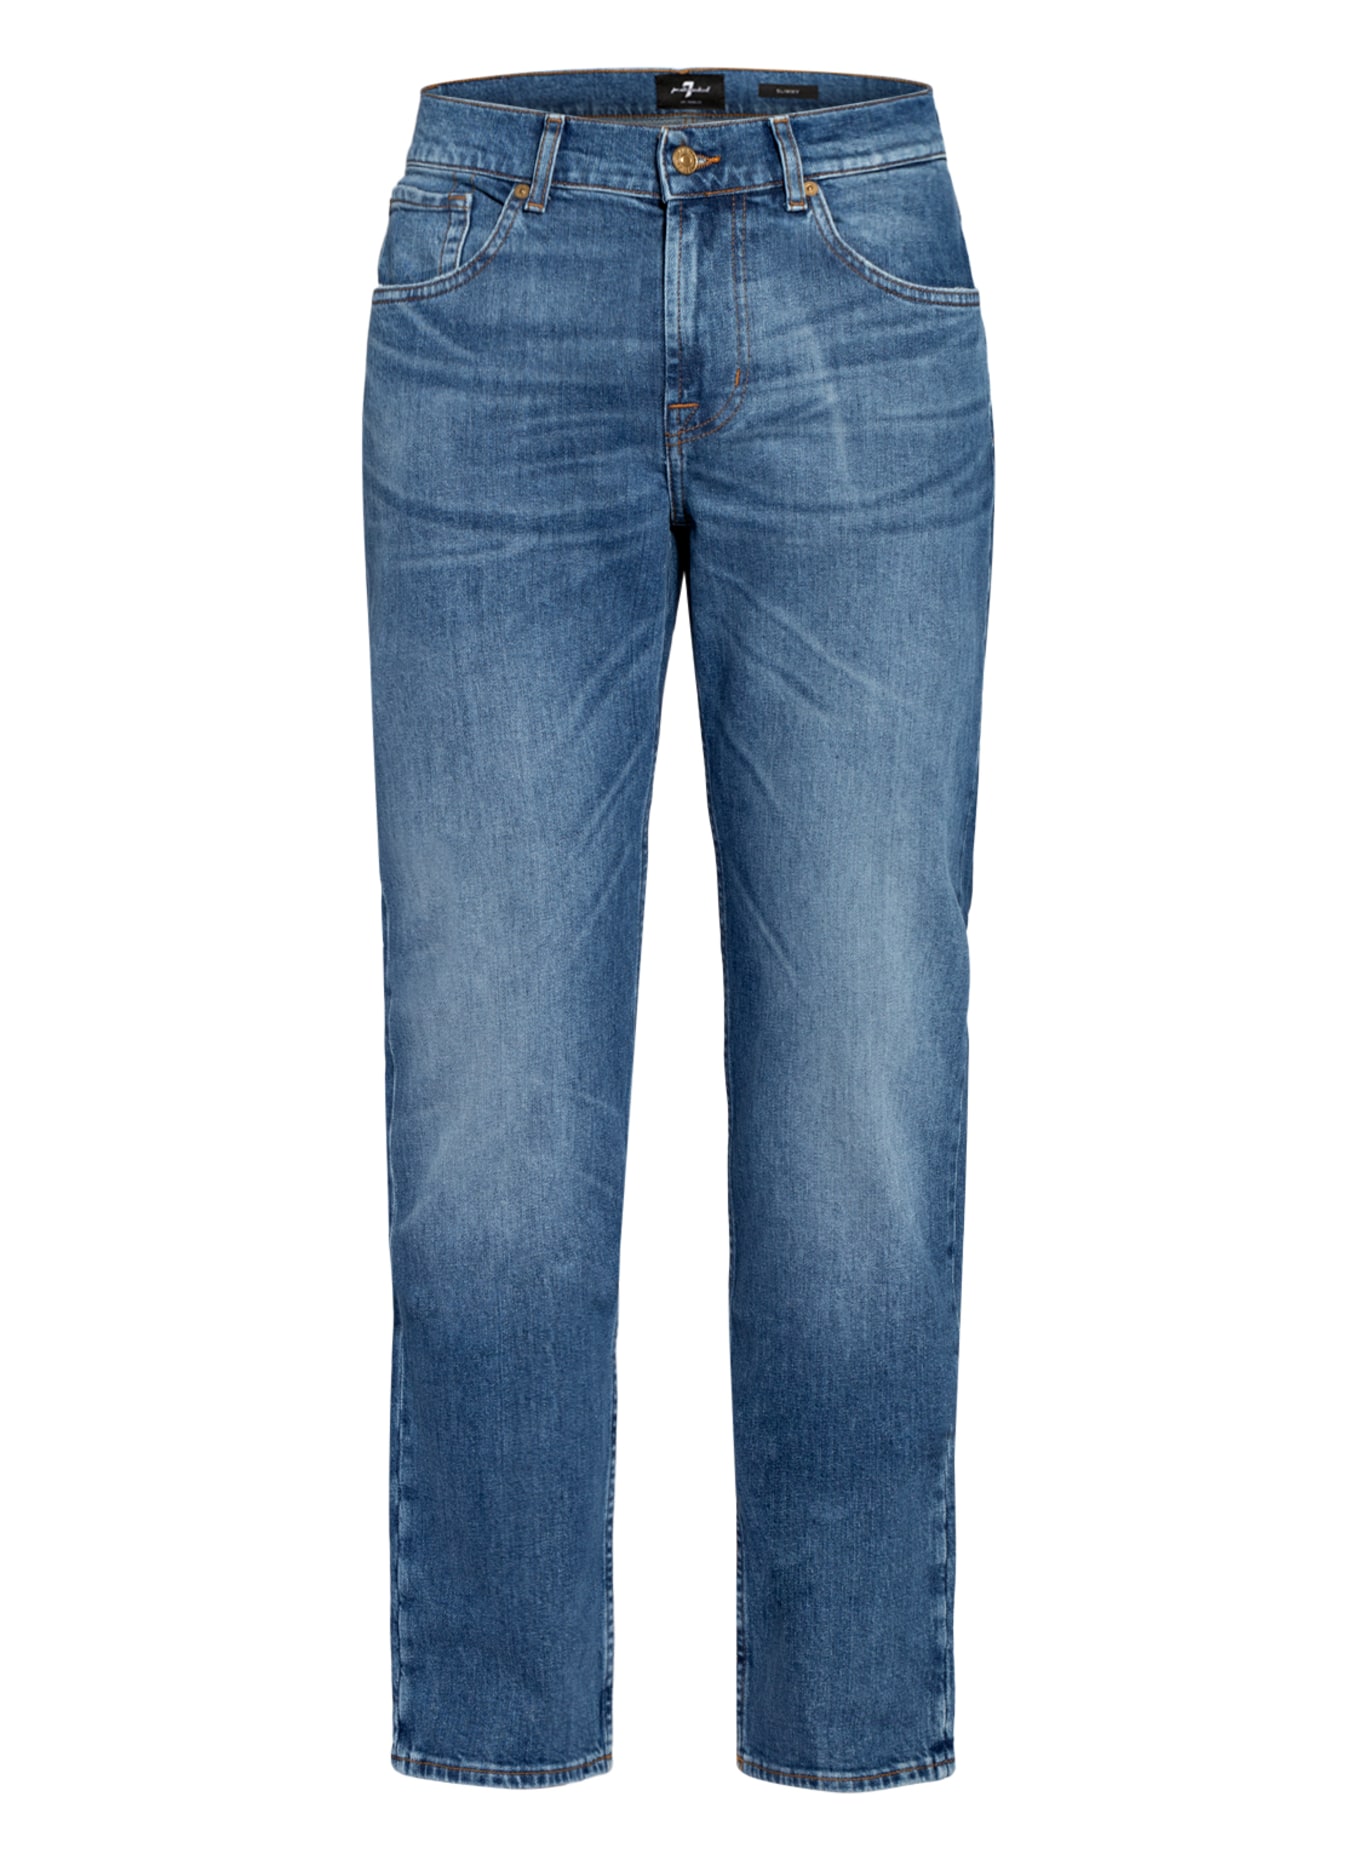 7 for all mankind Jeans SLIMMY Slim Fit, Farbe: LIGHT BLUE (Bild 1)